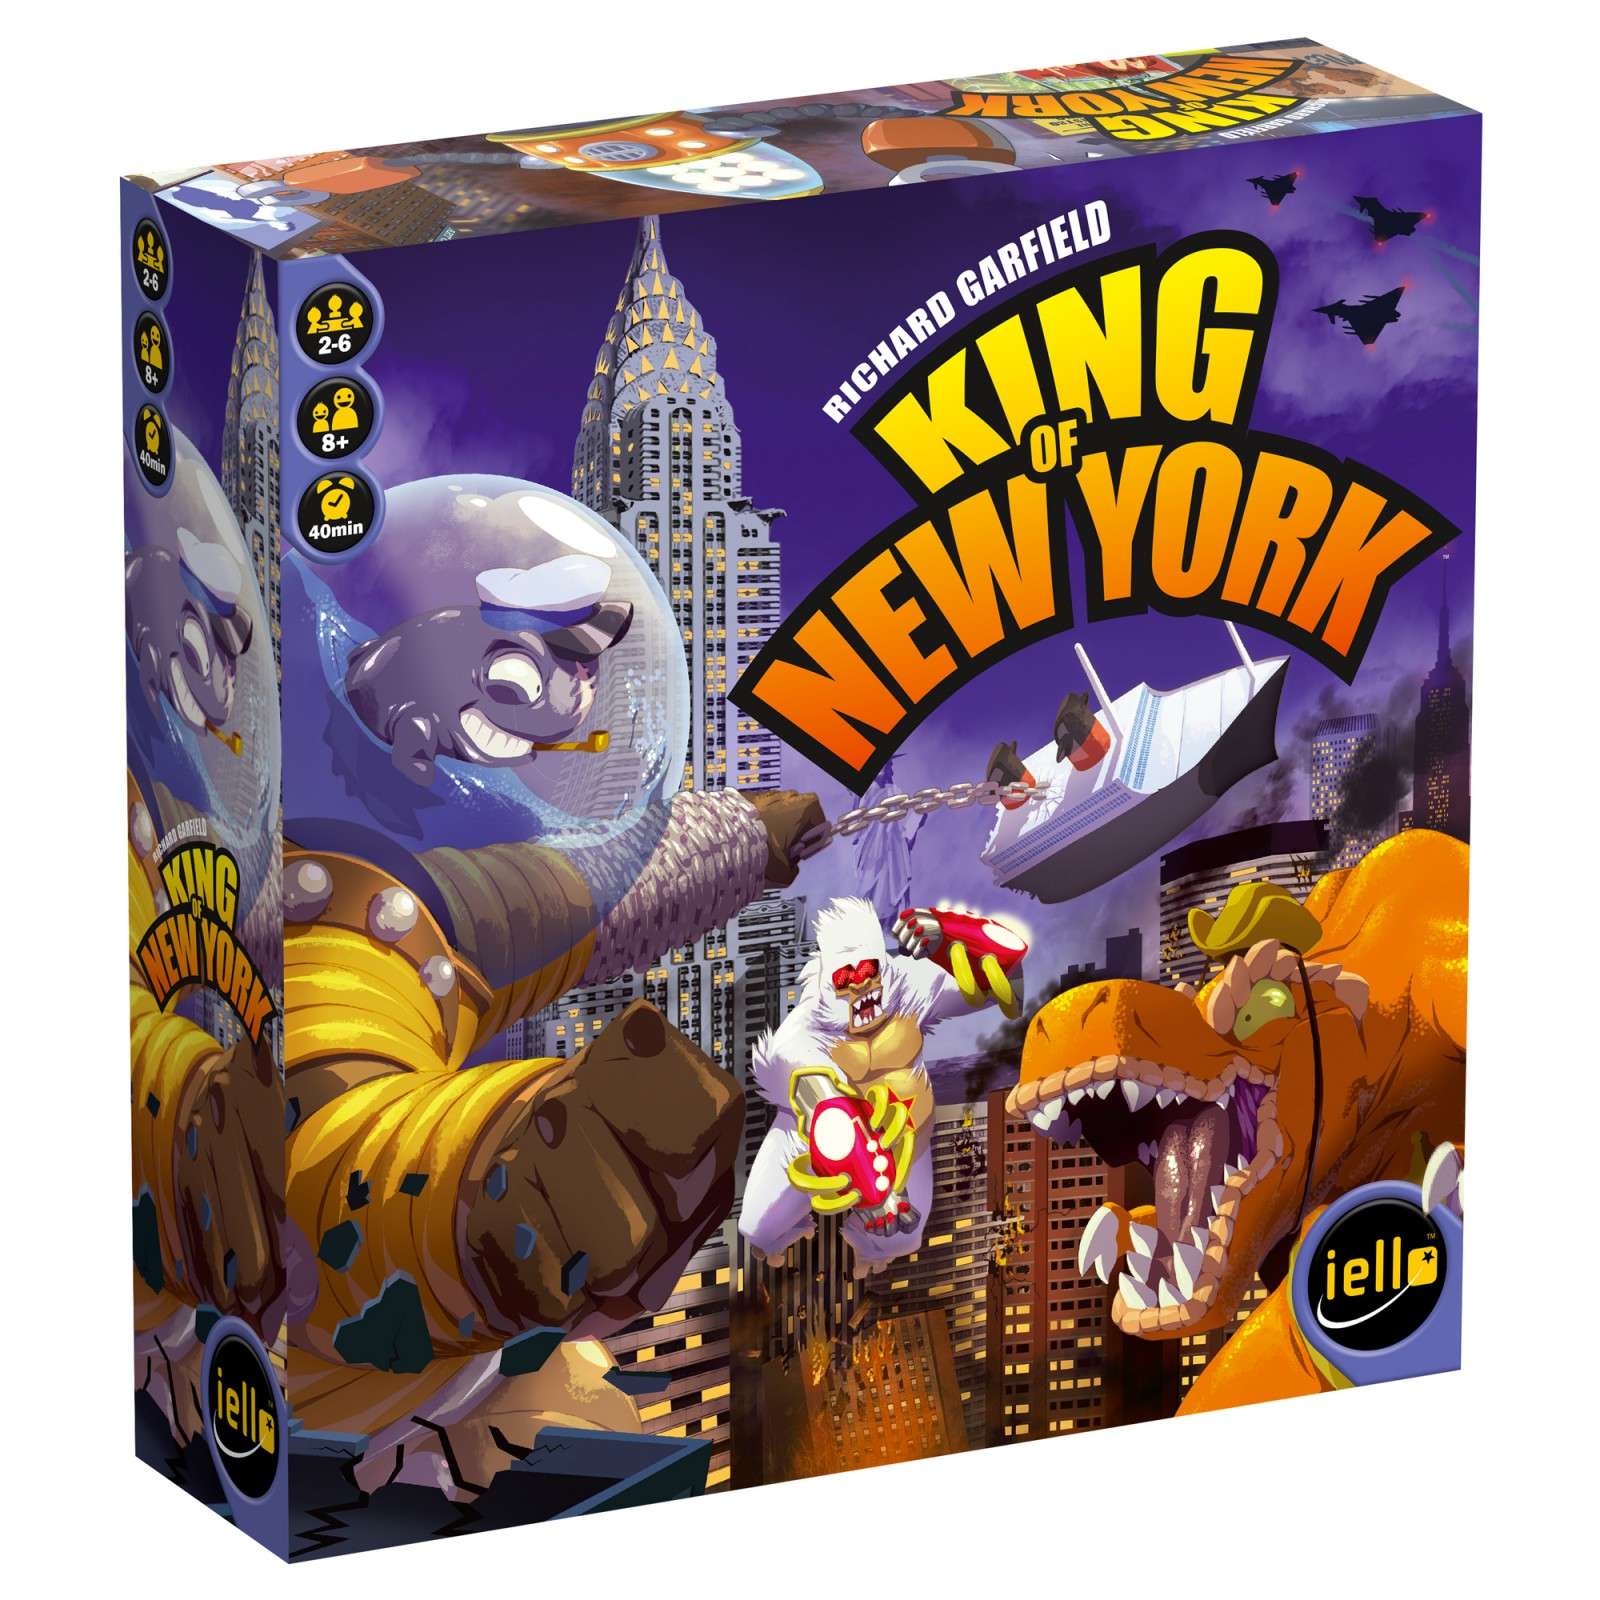 King of New York Boardgame, English